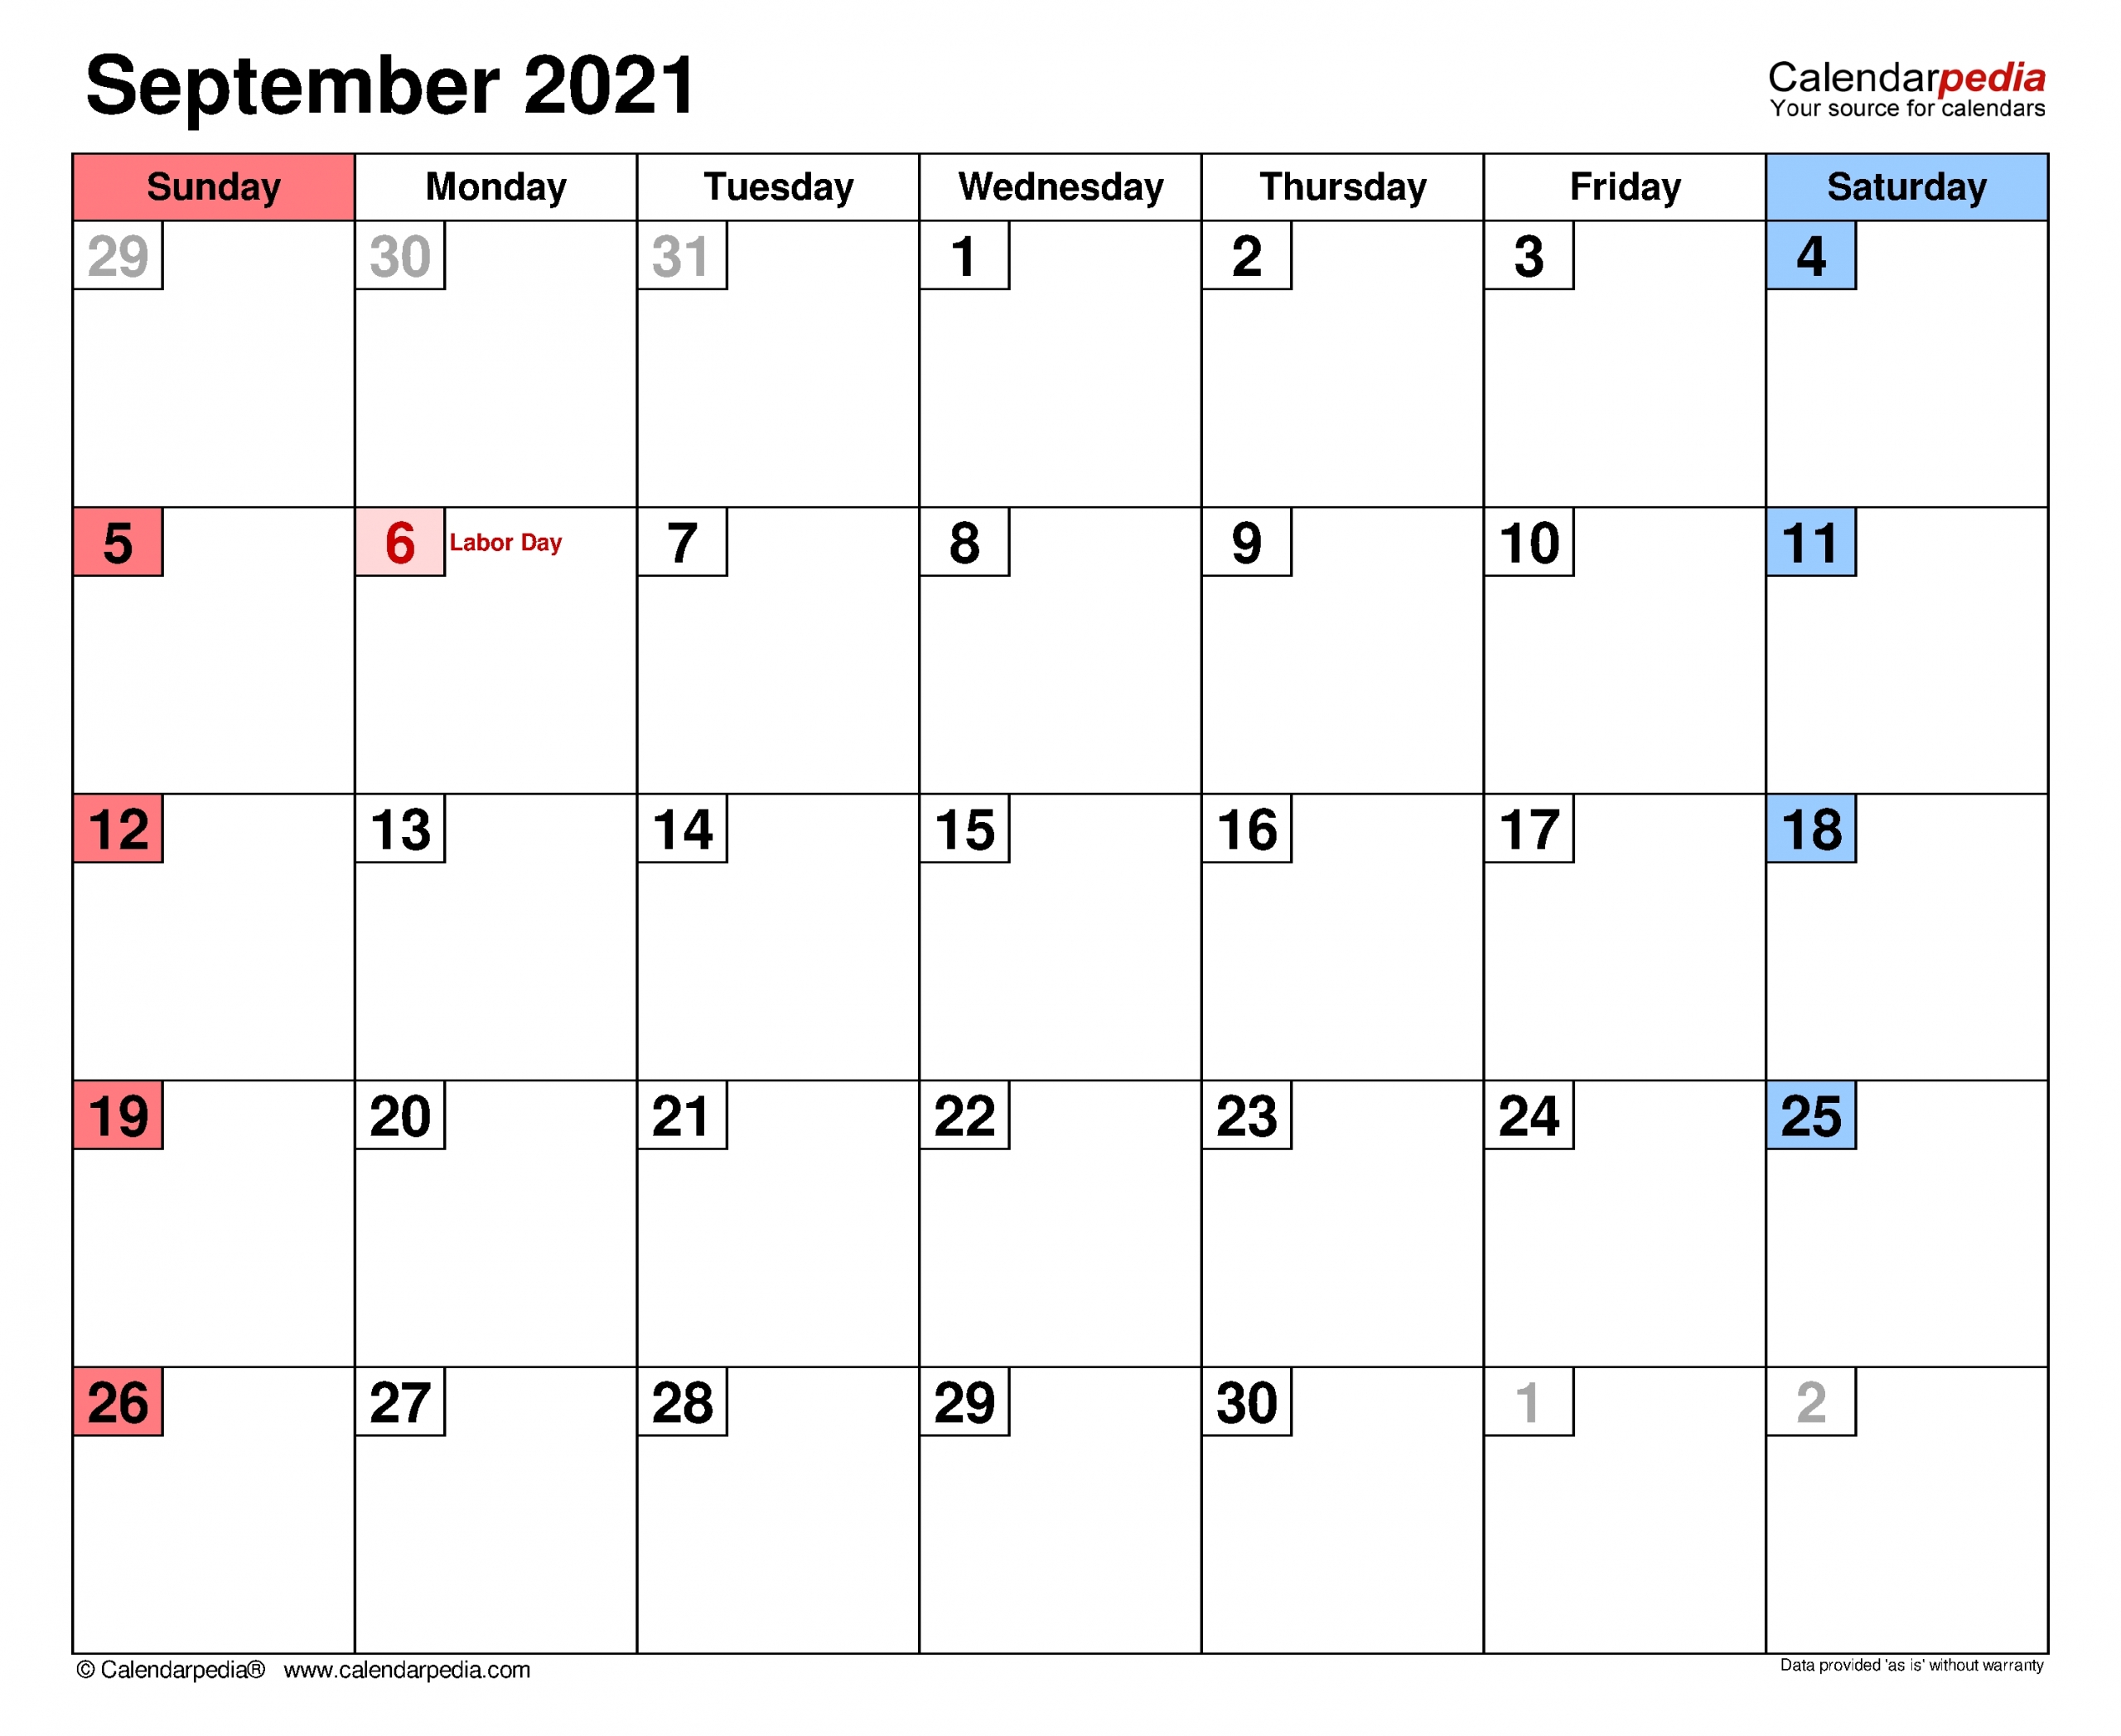 September Calendar 2021 With Holiday | Best Calendar Example September 2021 Calendar Reading